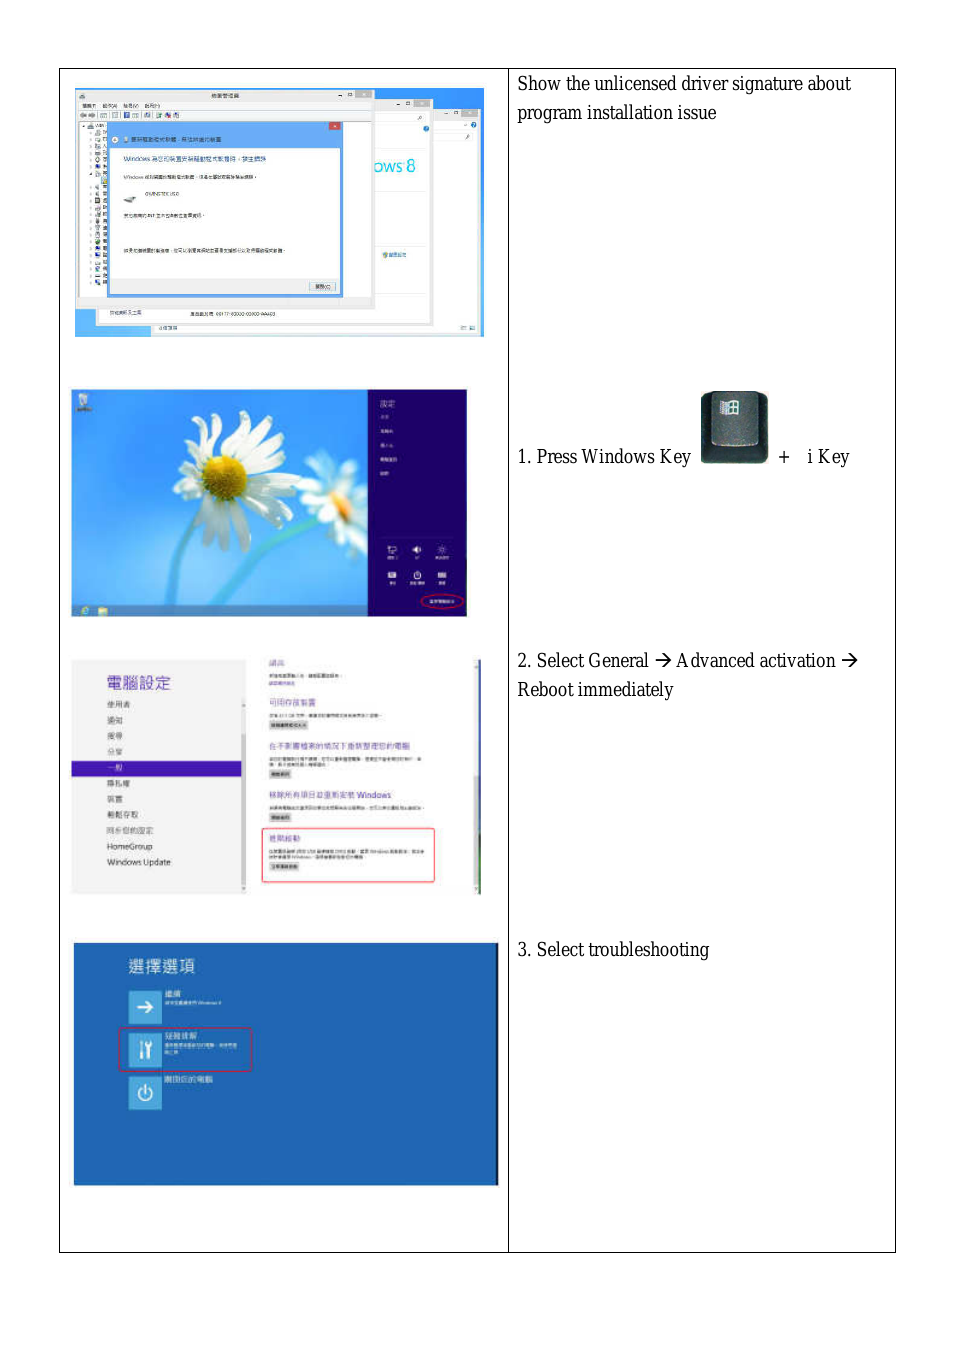 USG-Series Installation Issue of Windows 8.0